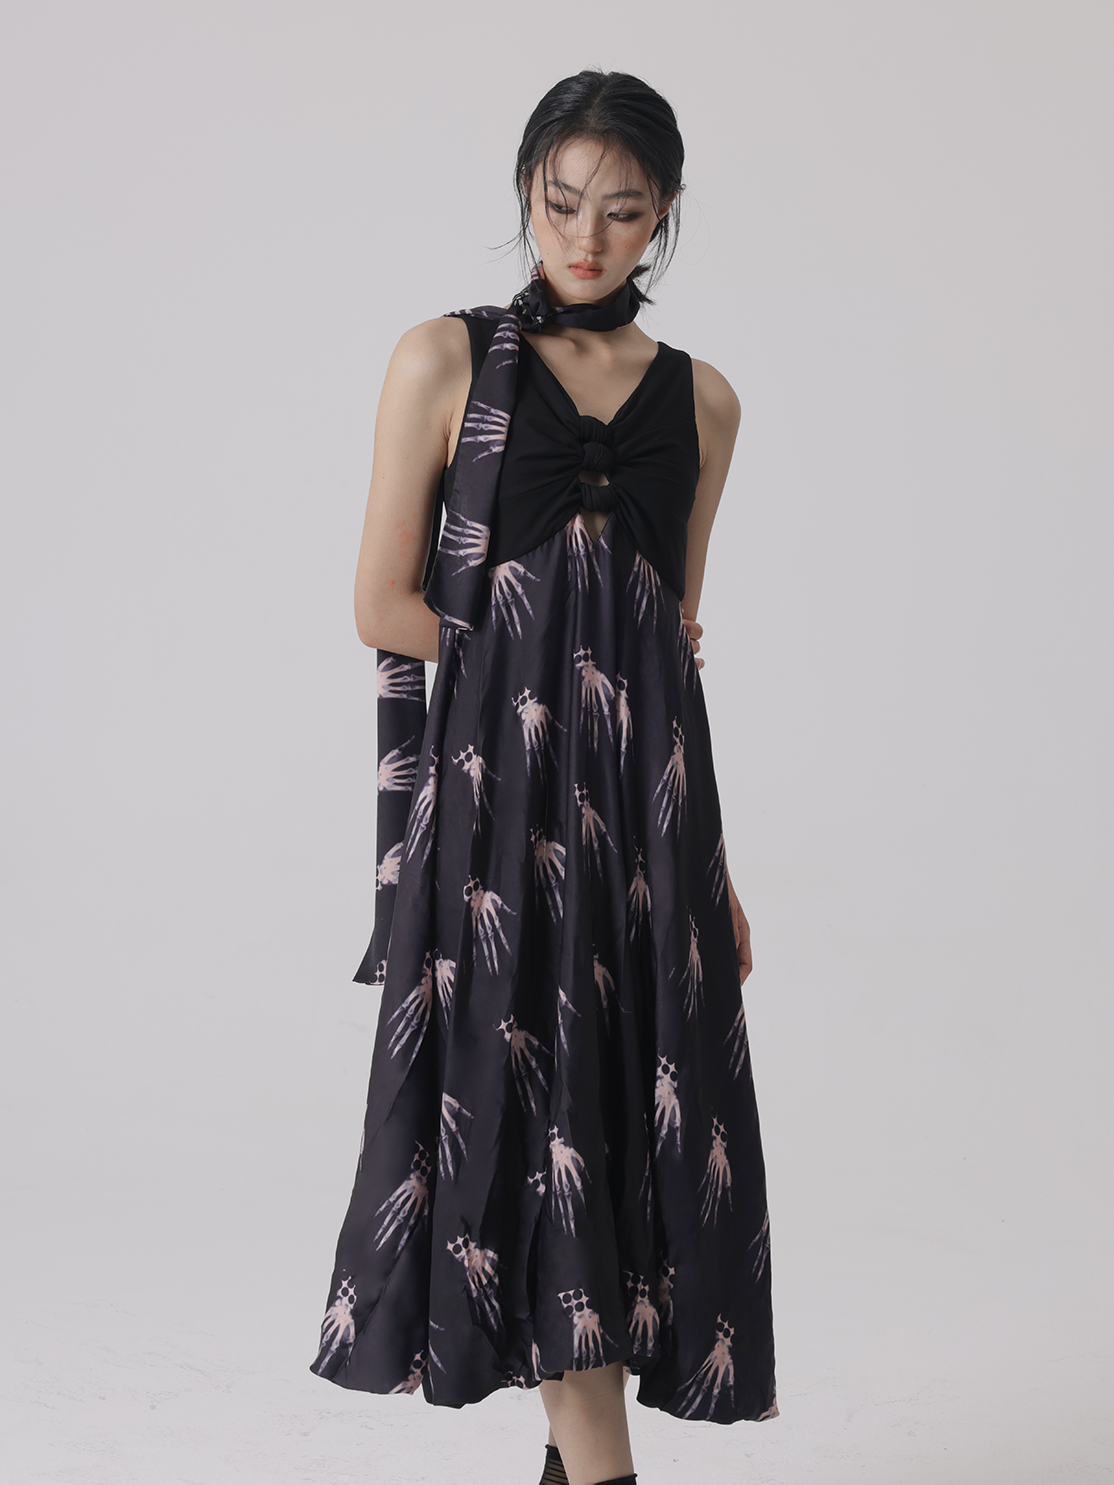 Draped taupe dress Design by Devika Seth at Modvey